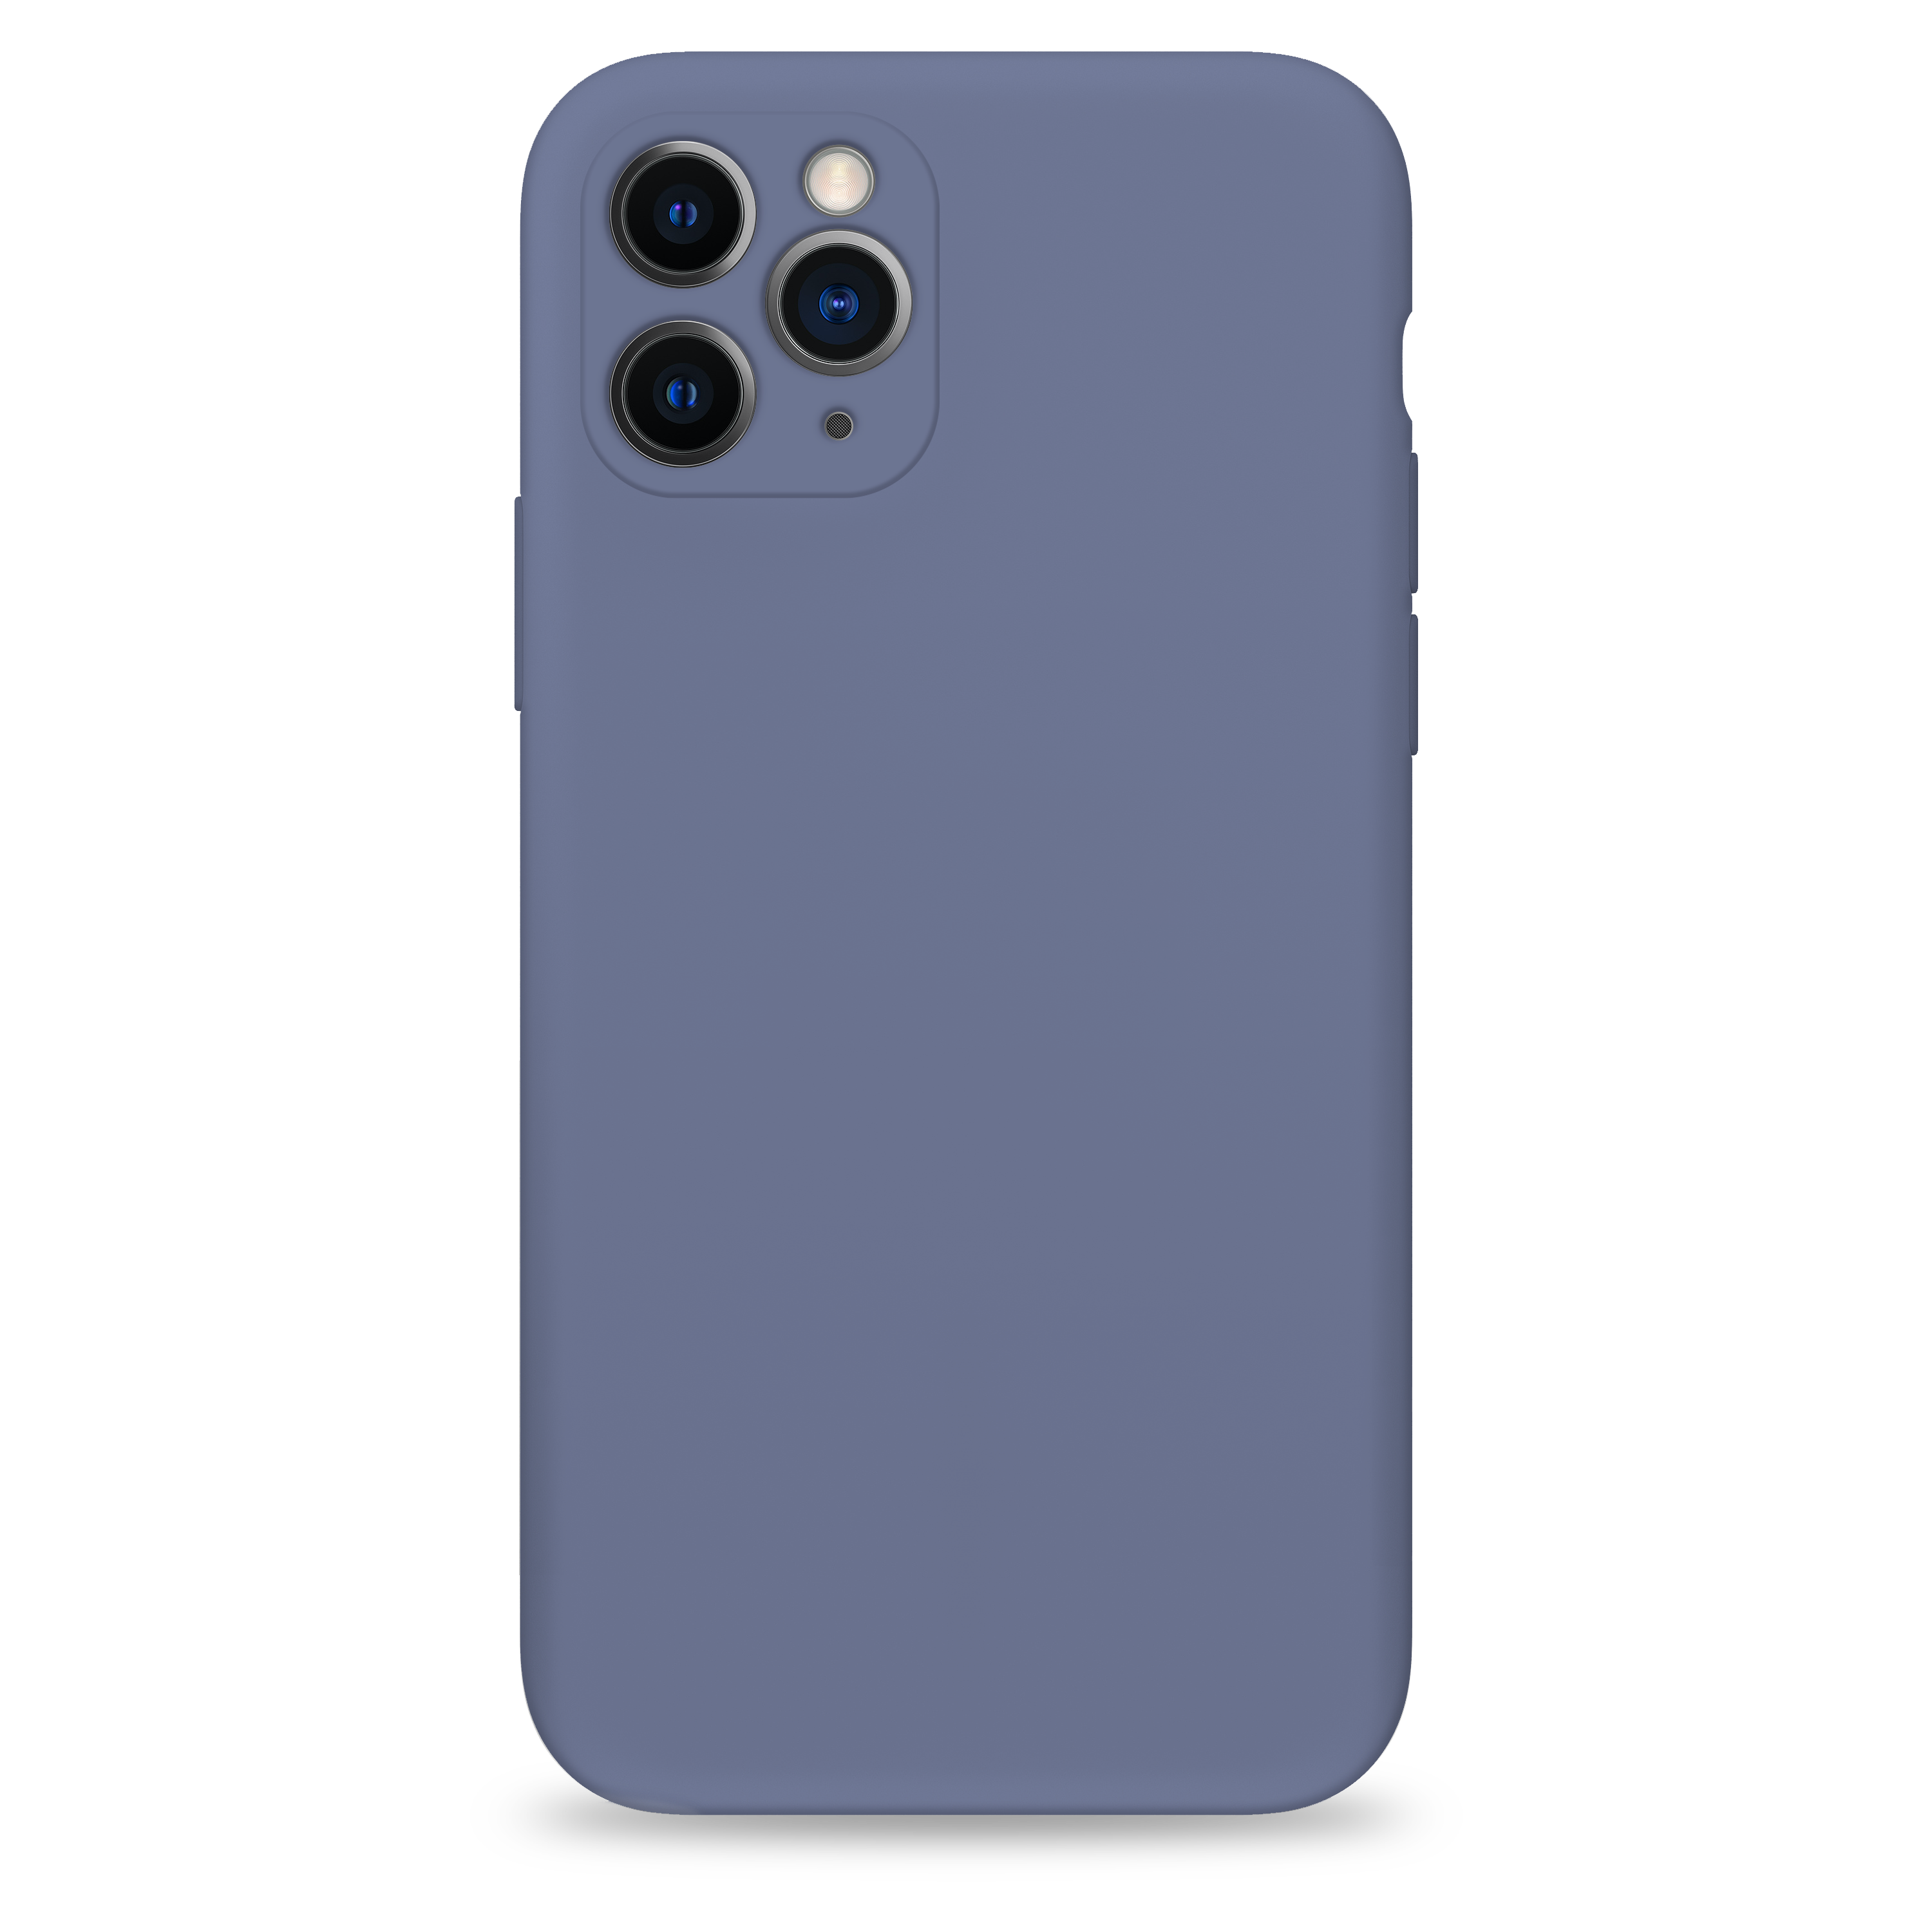 iPhone 11 Pro Max silicone case